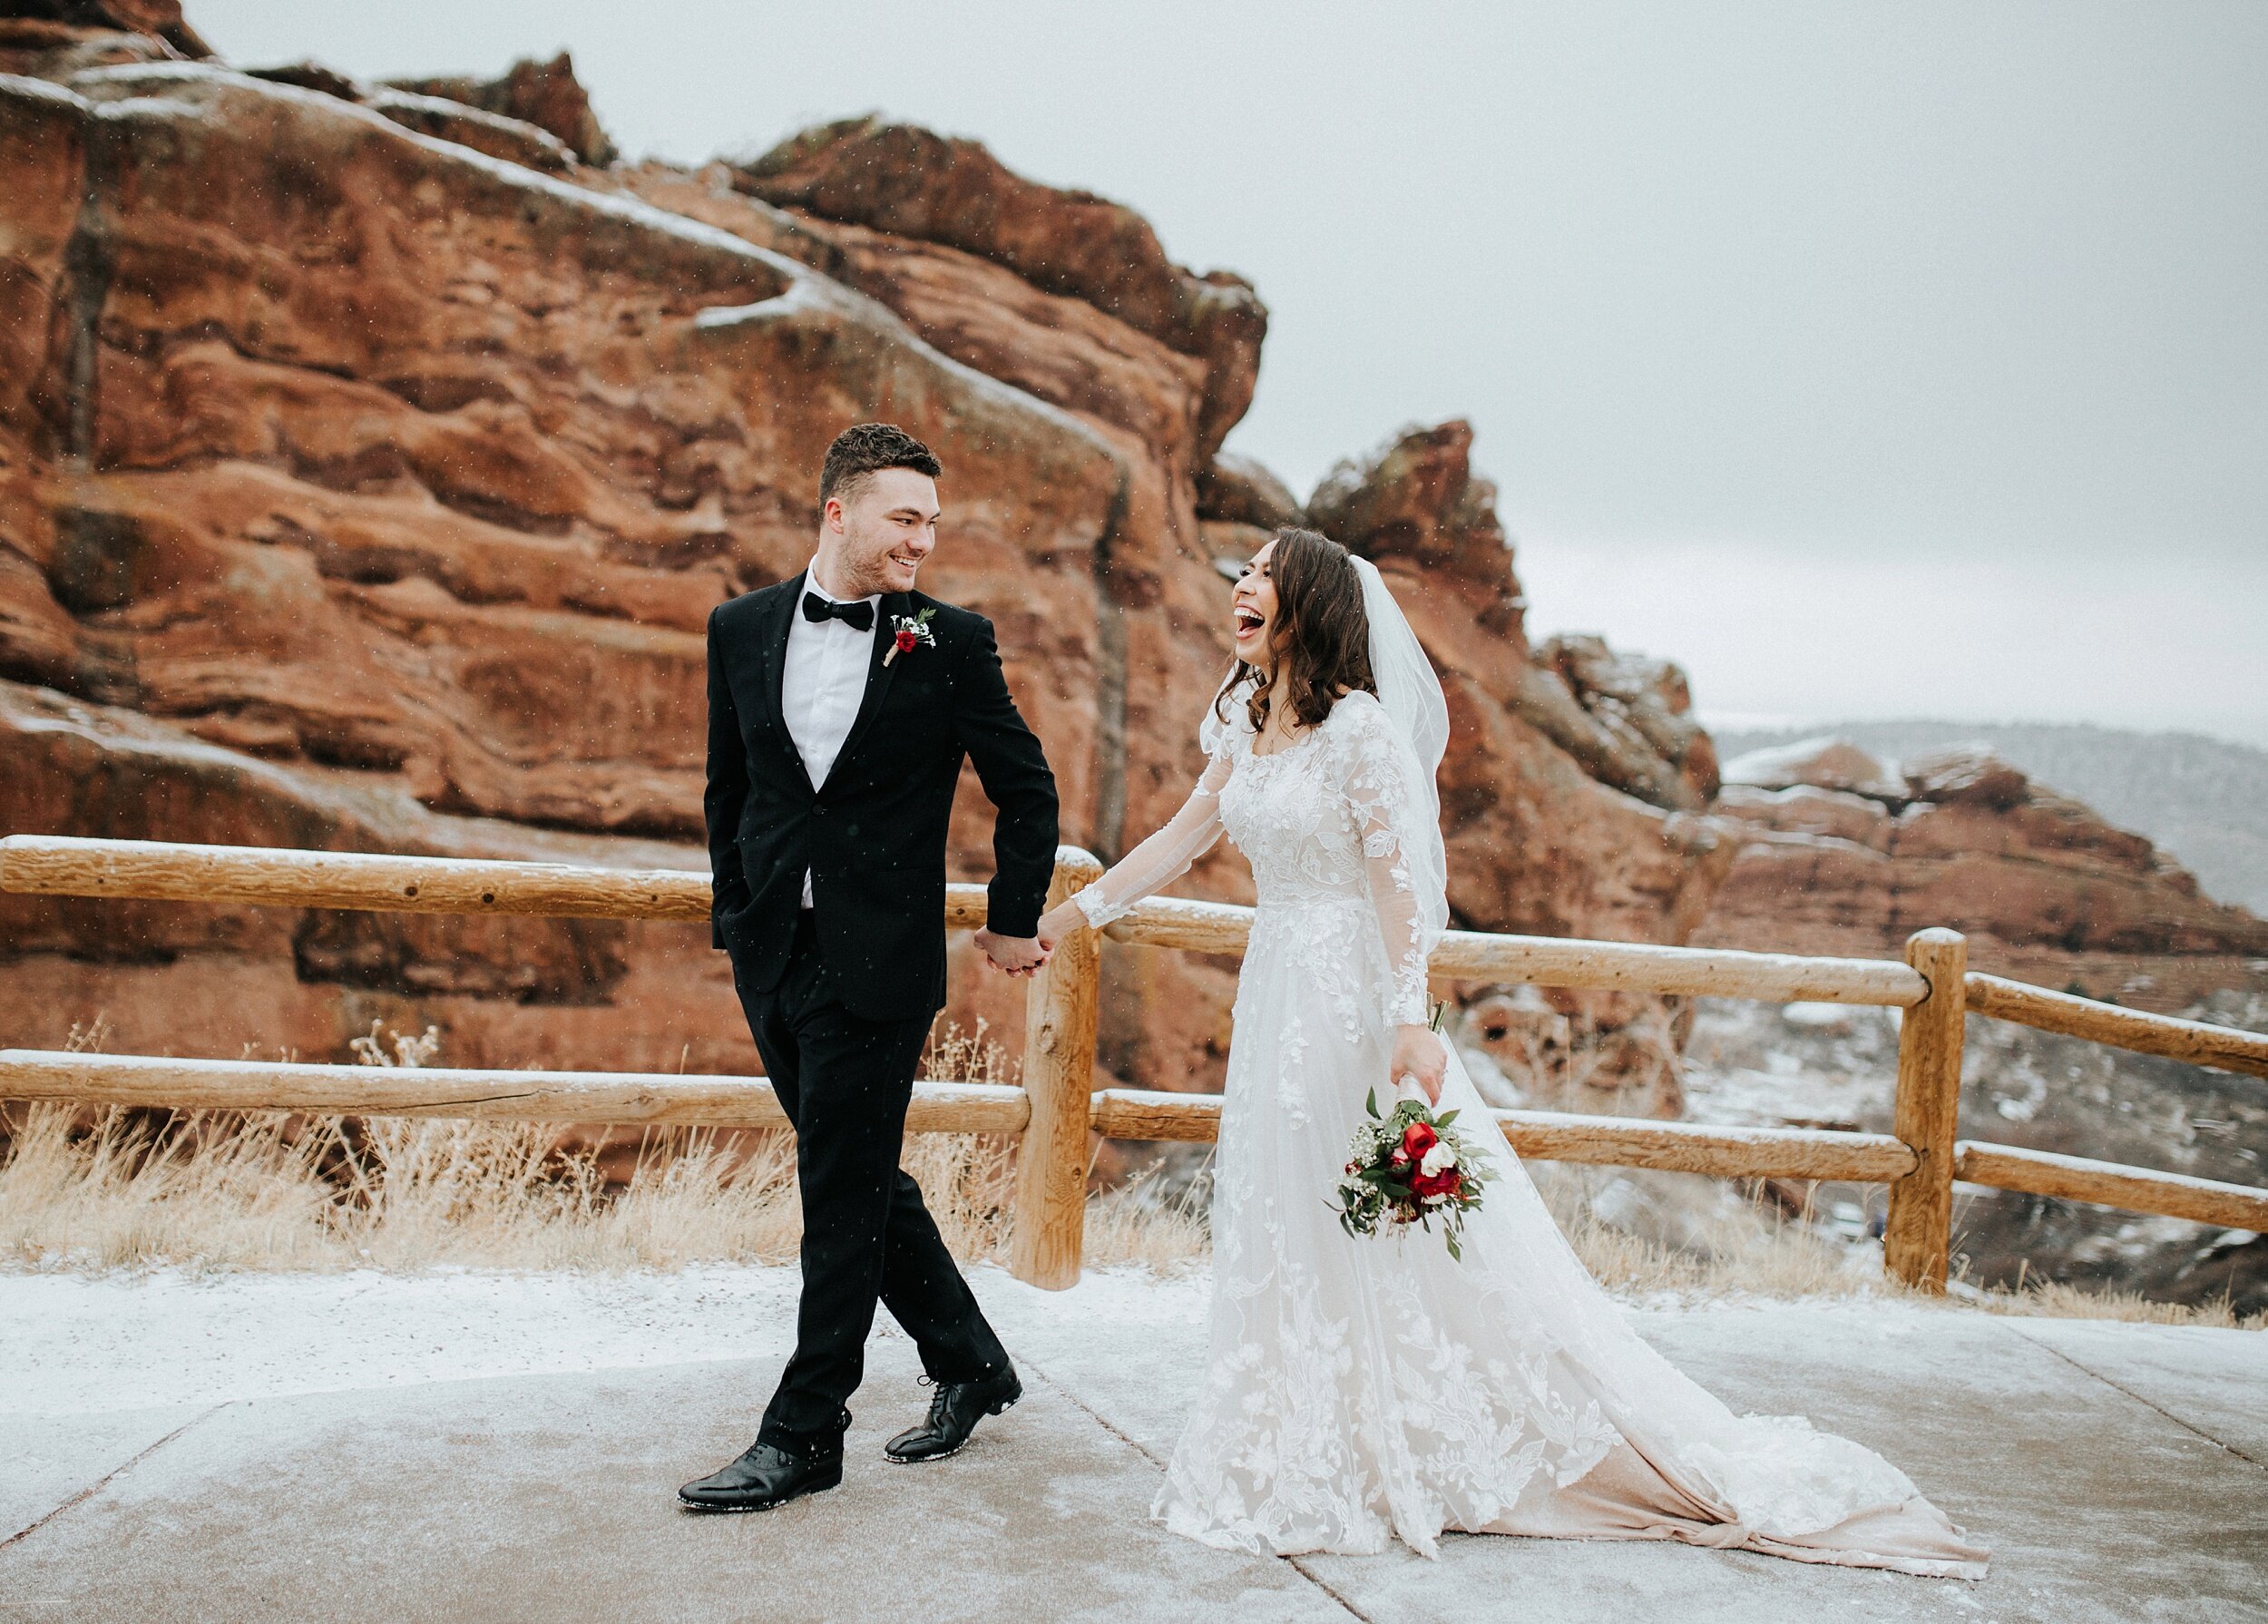 Red-Rocks-Morisson-Colorado-Elopement-Micro-Wedding-Print-1.jpg